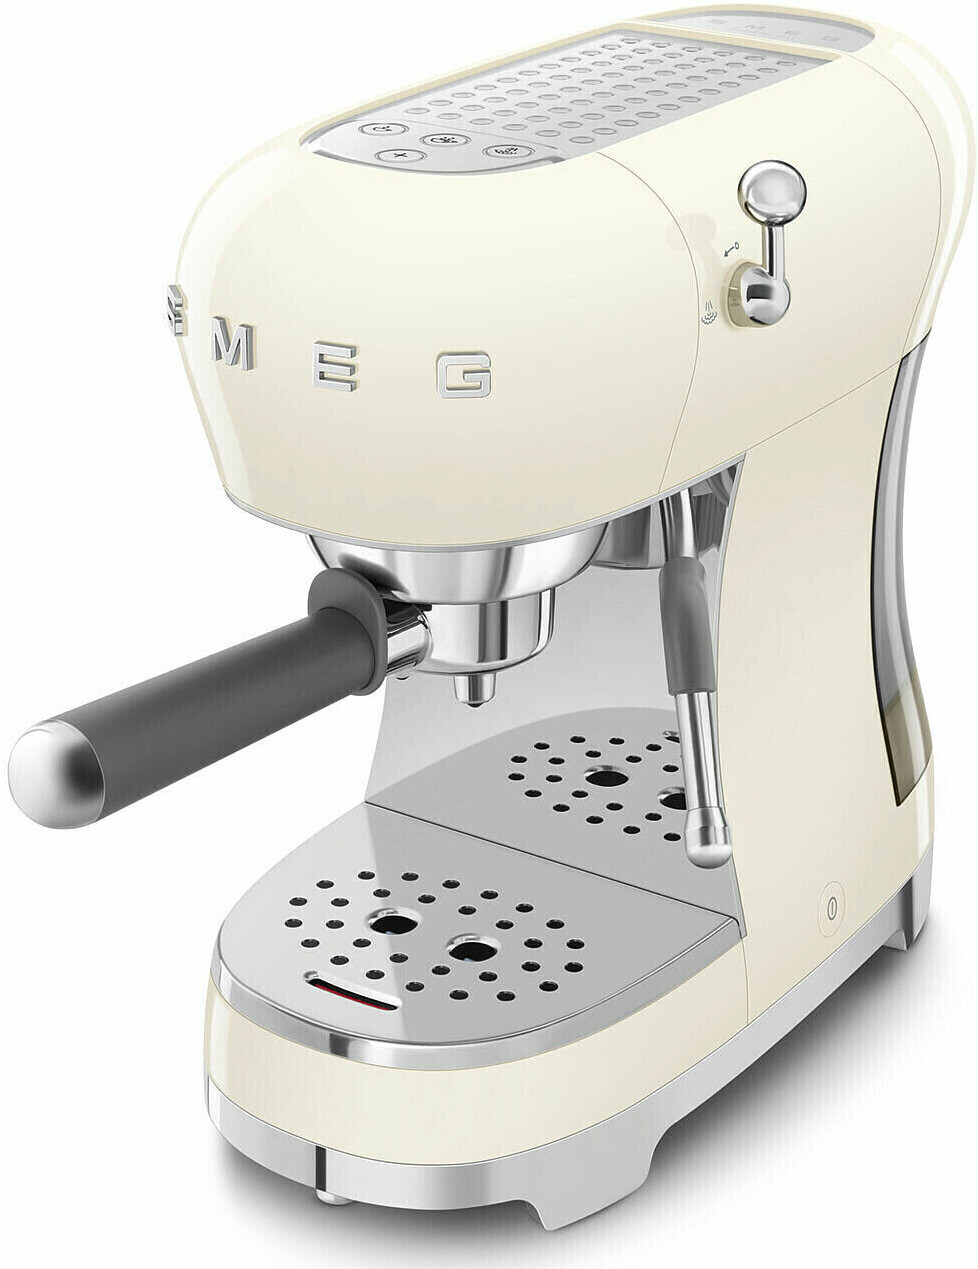 Comprar Cafetera espresso smeg ecf02pgeu barata con envío rápido